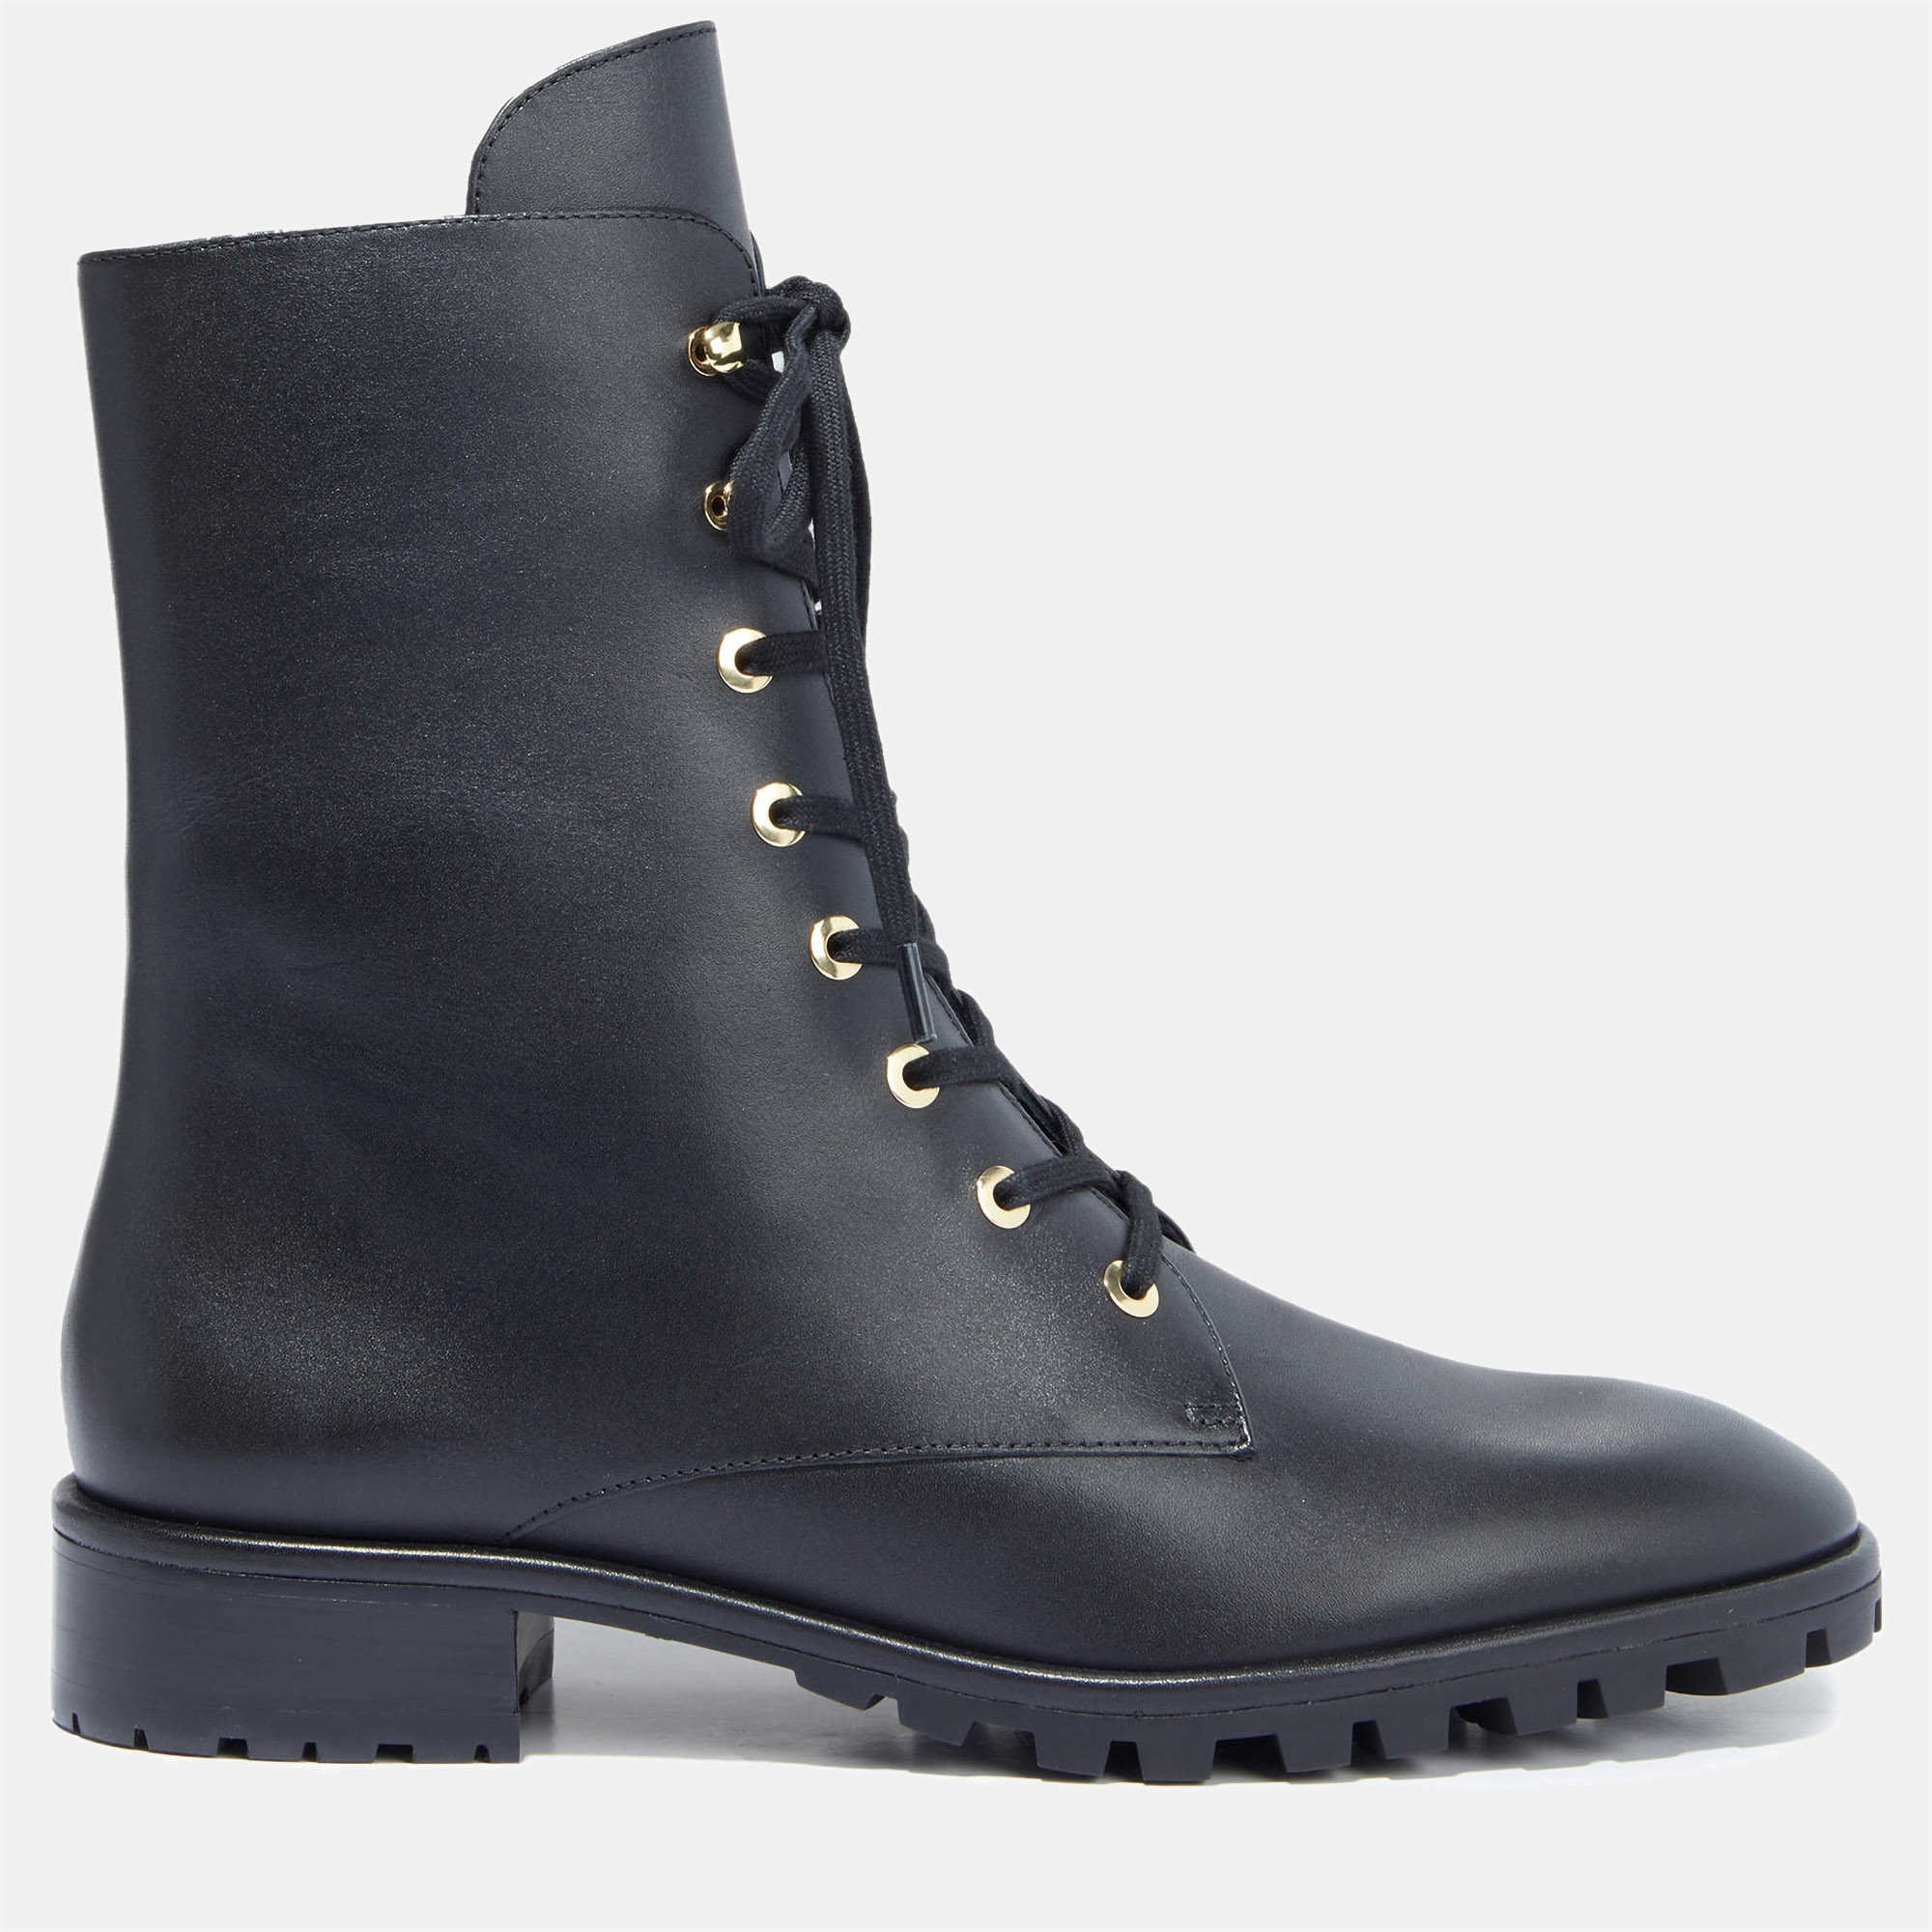 Stuart weitzman leather zip combat boots size 38